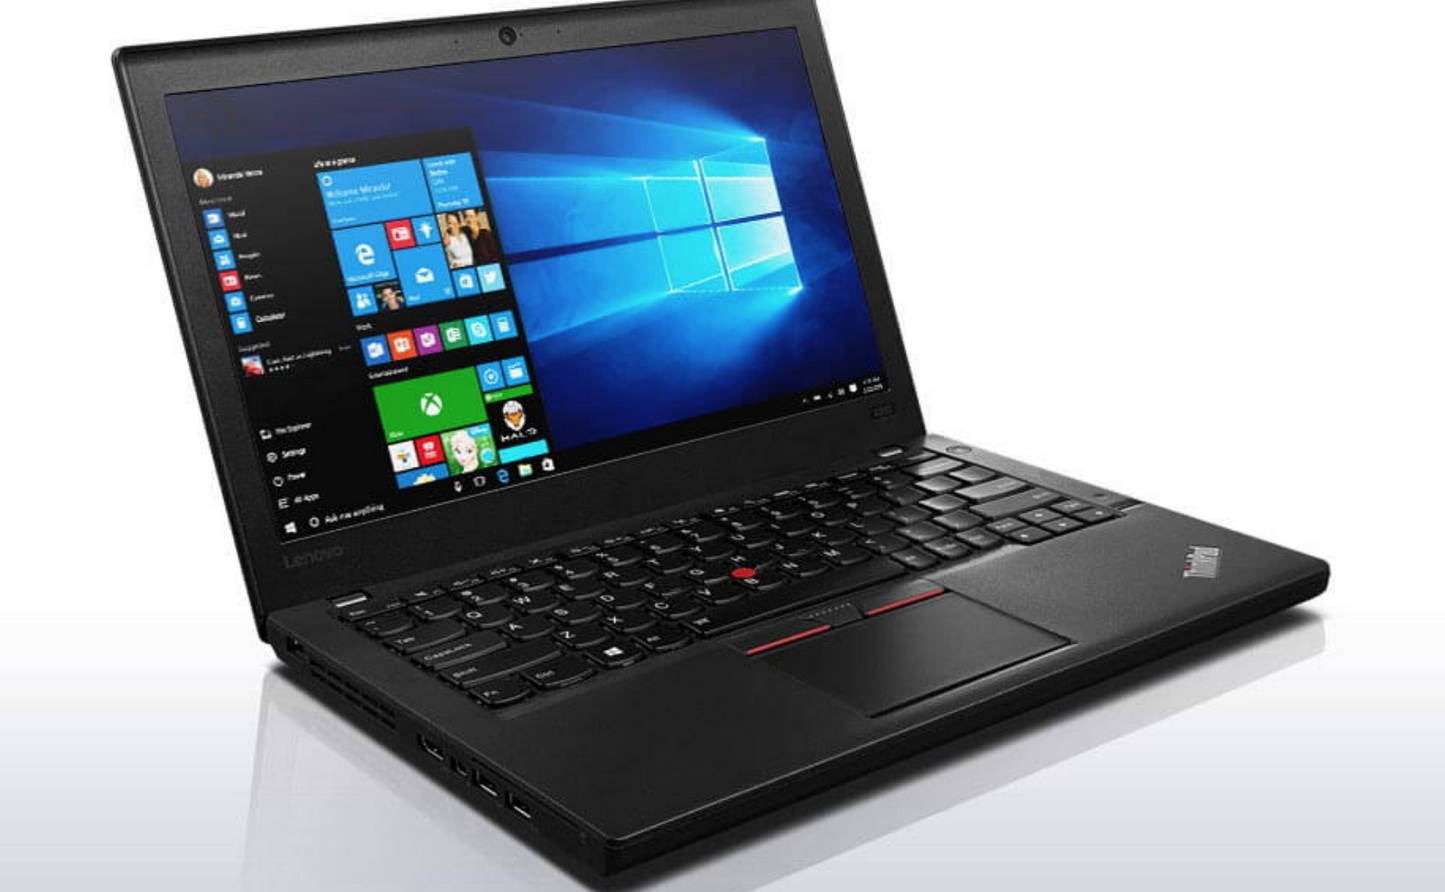 Lenovo ThinkPad X250 Core I5 8GB RAM Upto 2TB SSD Windows10 Laptop Customise your Spec